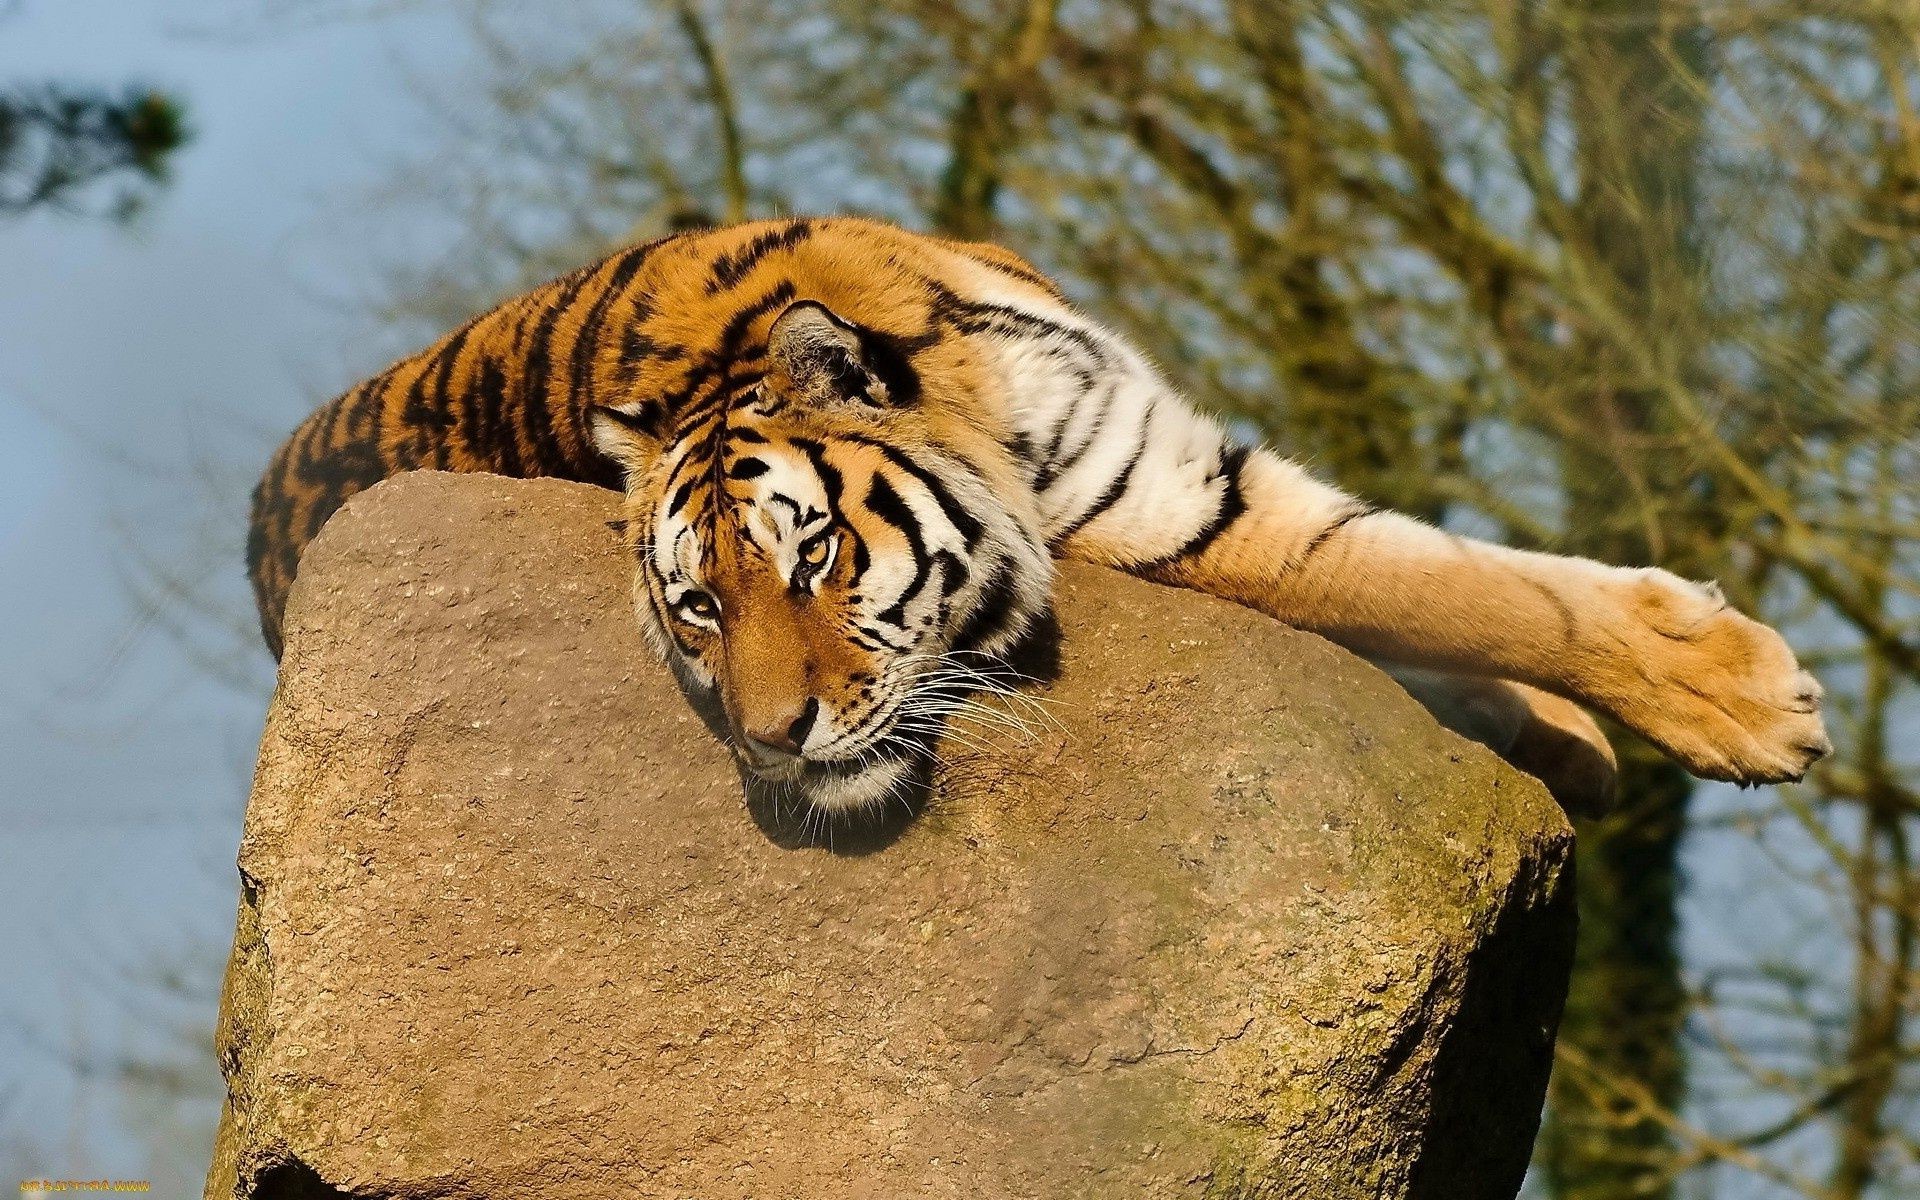 tigers cat tiger wildlife mammal nature predator hunter wild danger carnivore big animal zoo hunt fur jungle